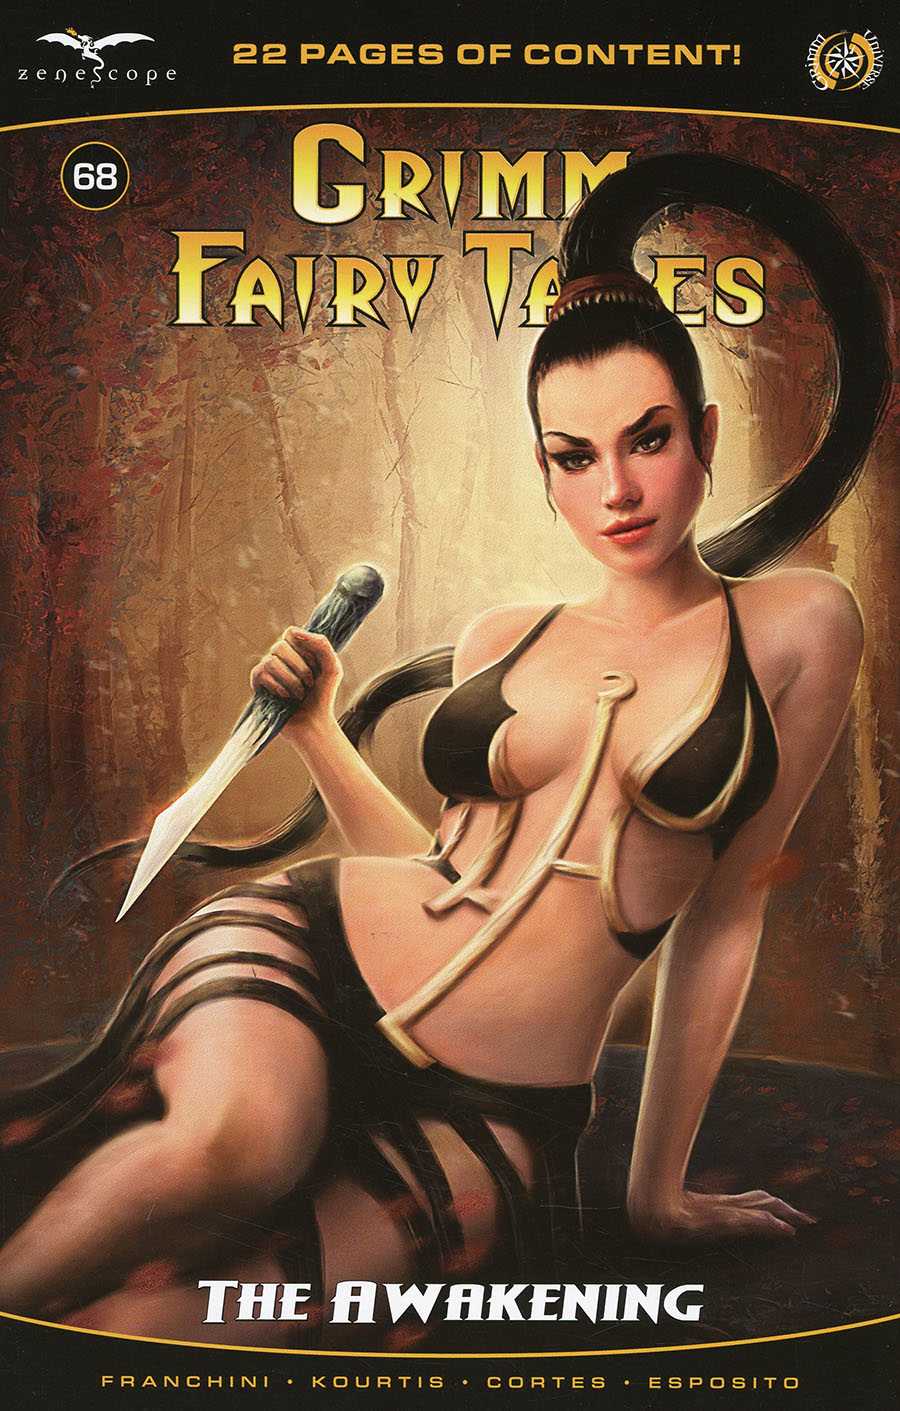 Grimm Fairy Tales Vol 2 #68 Cover D Pierluigi Abbondanza